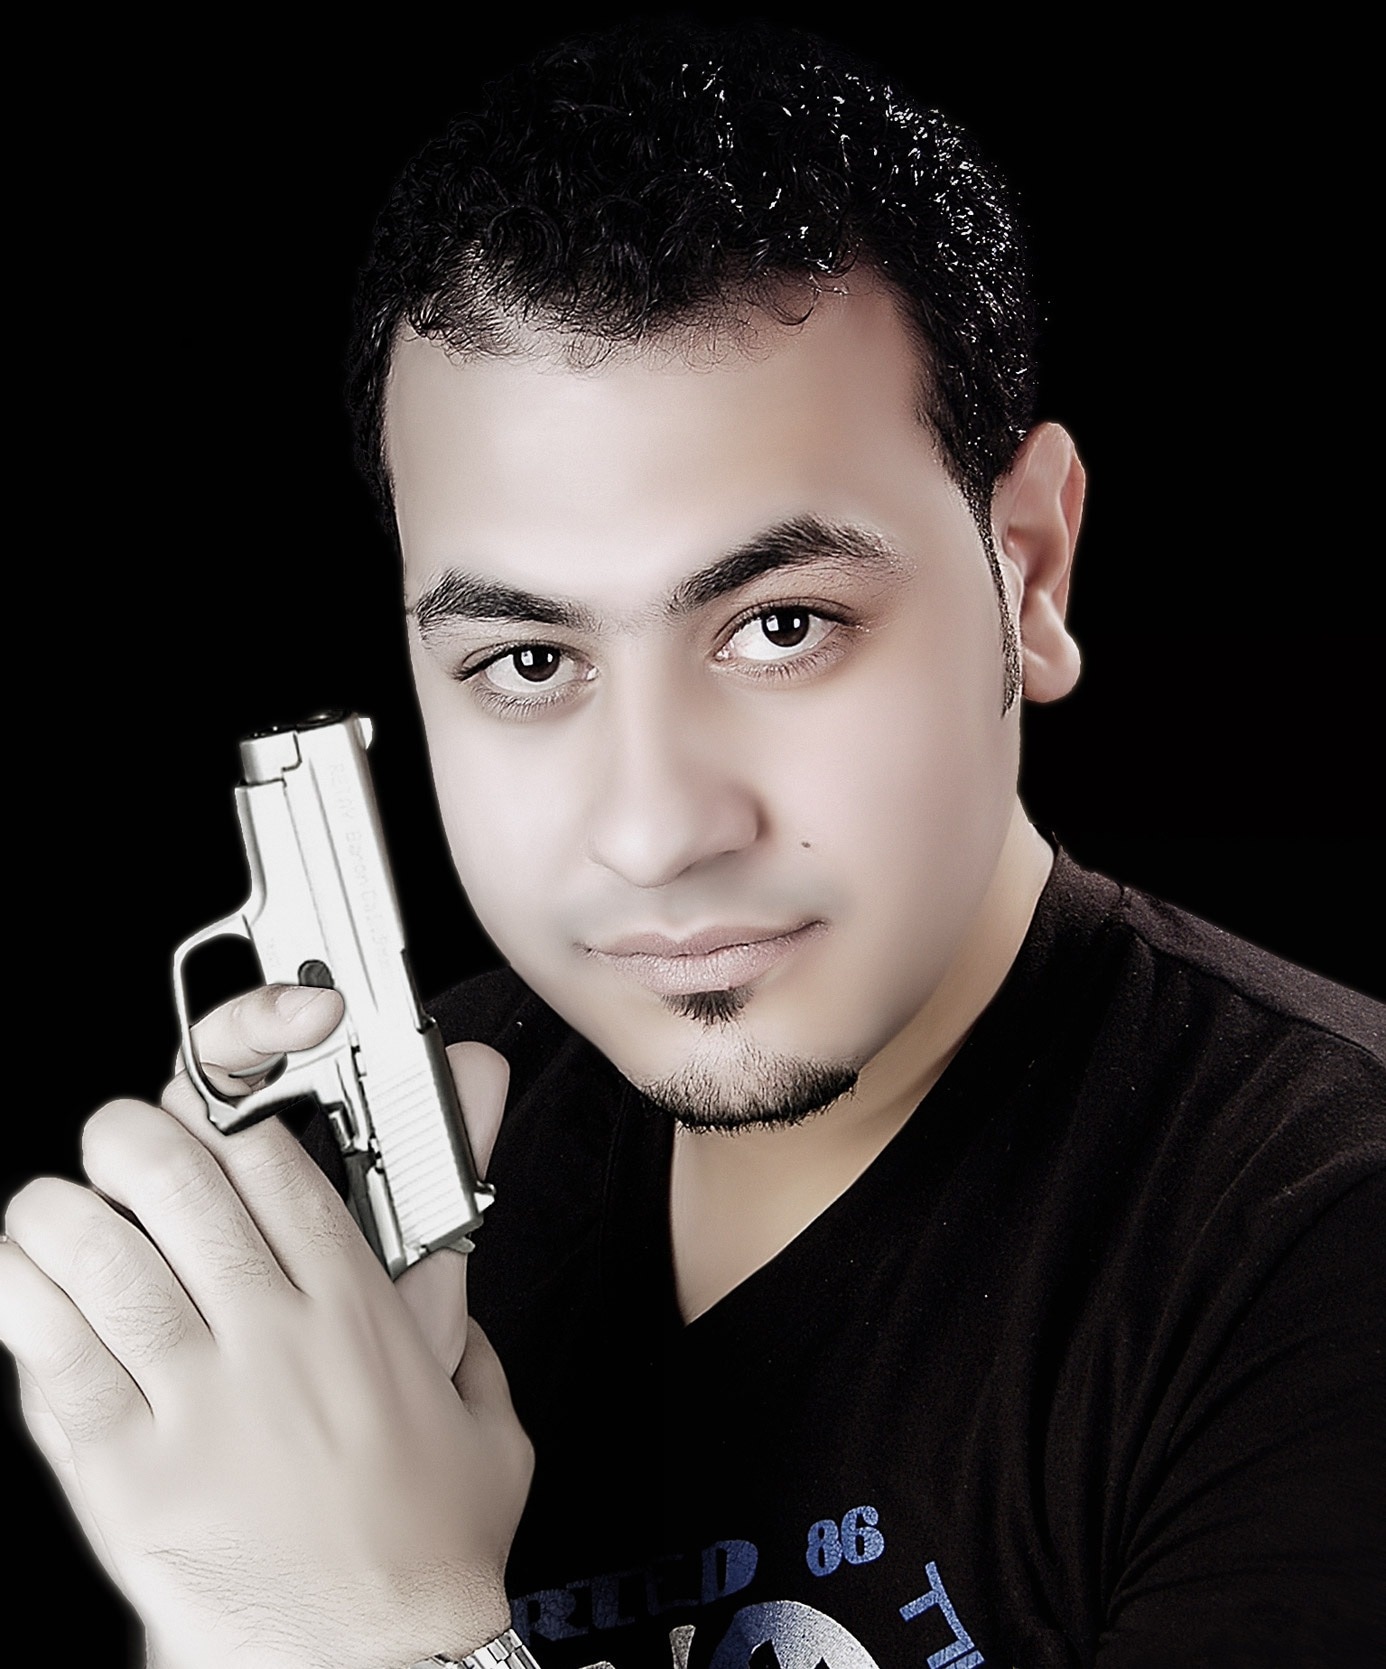 man in black v neck shirt holding gray semi automatic pistol